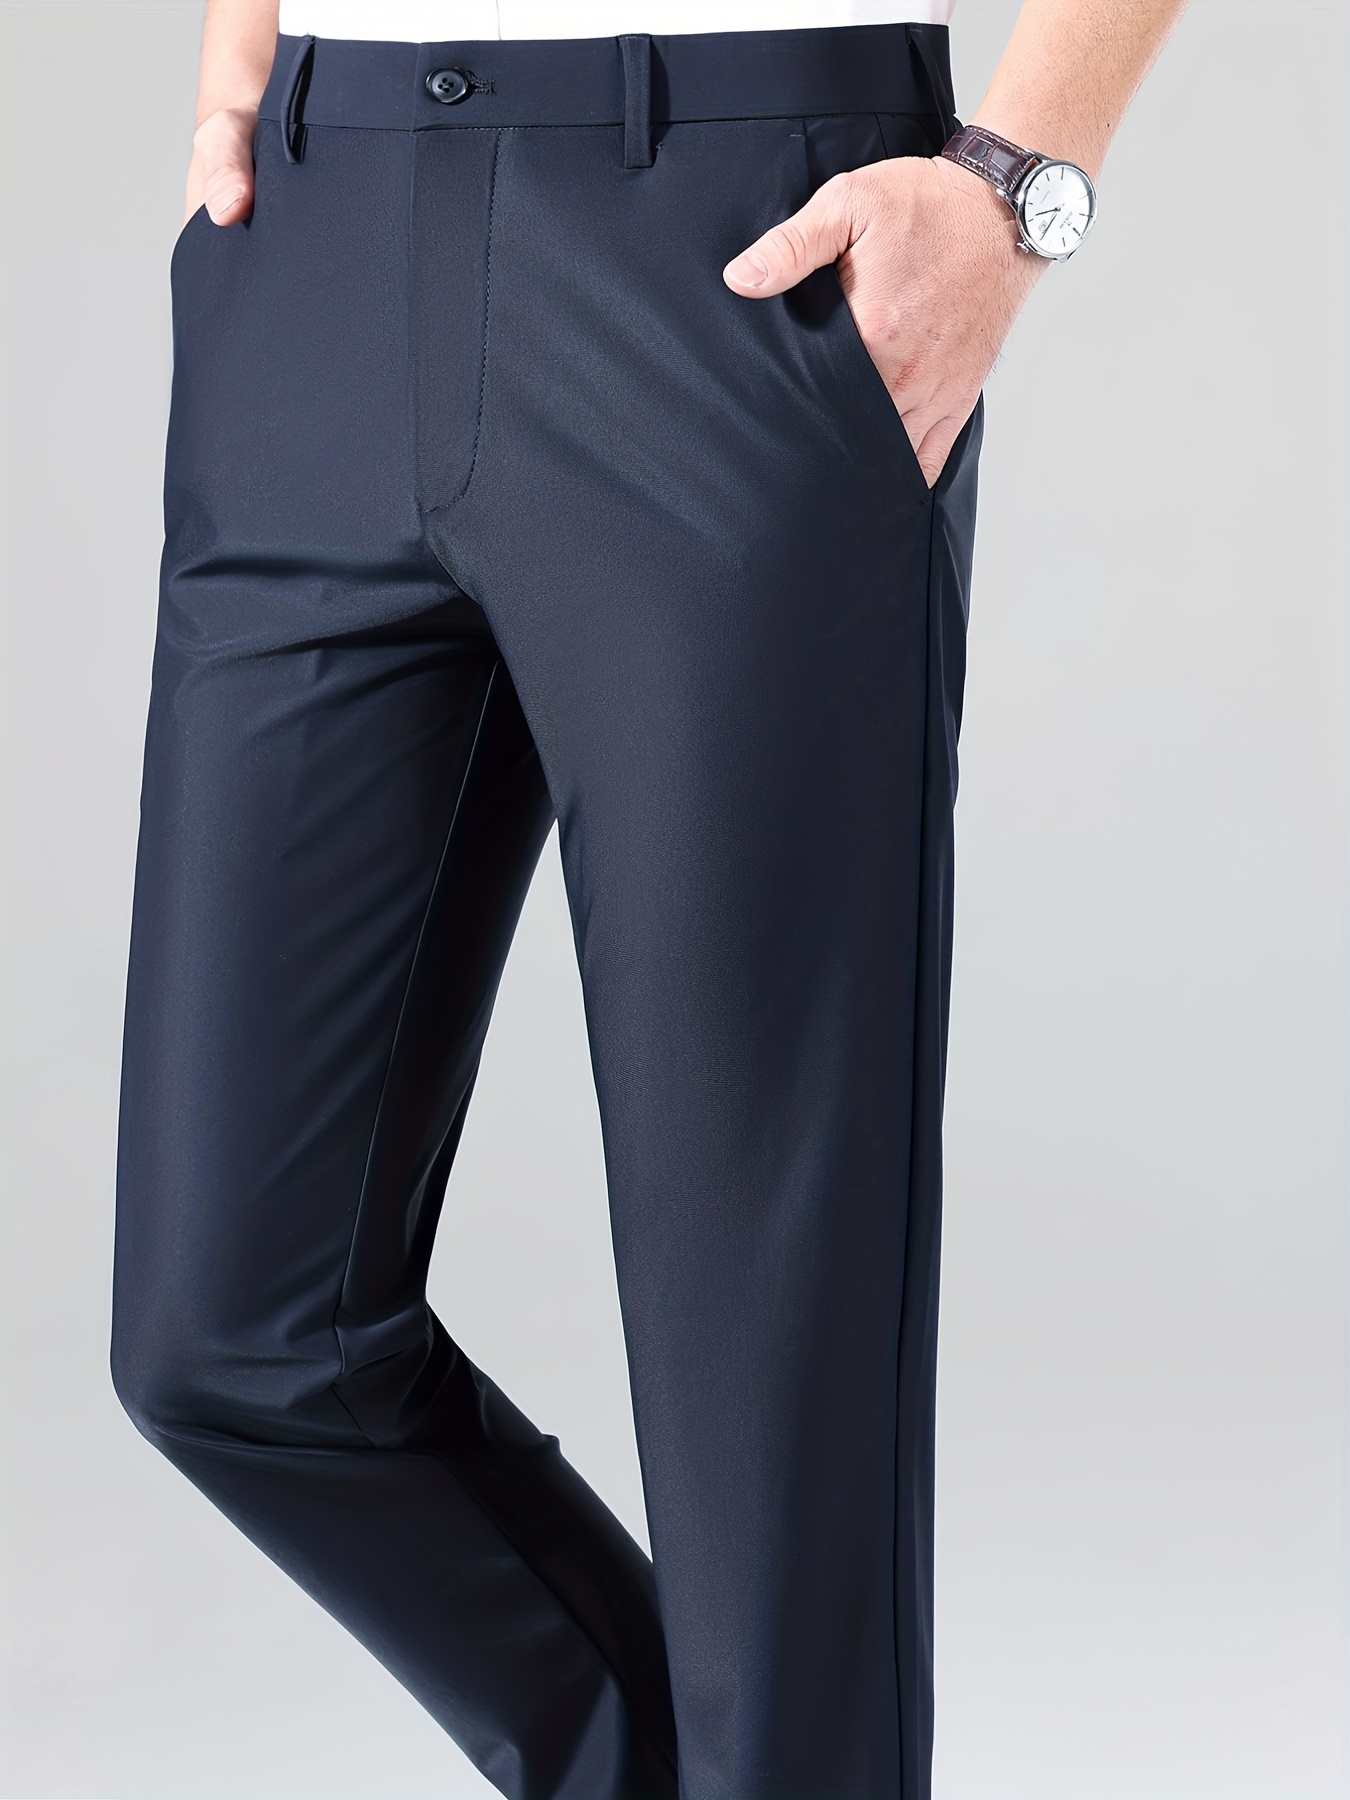 Men's Stretch Skinny Trousers - Black